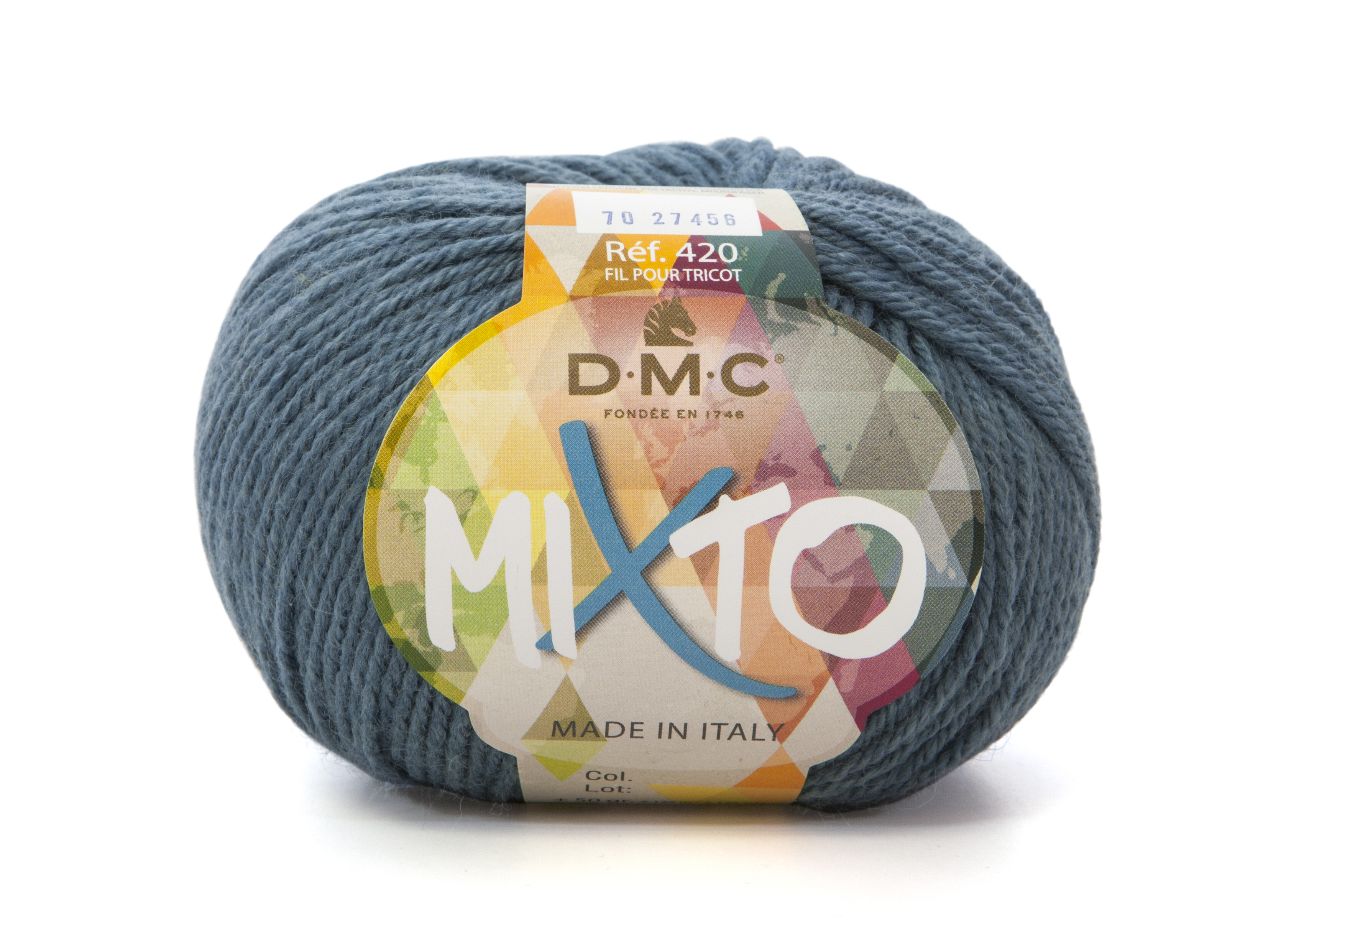 DMC MIXTO -50GR/125M 50% 